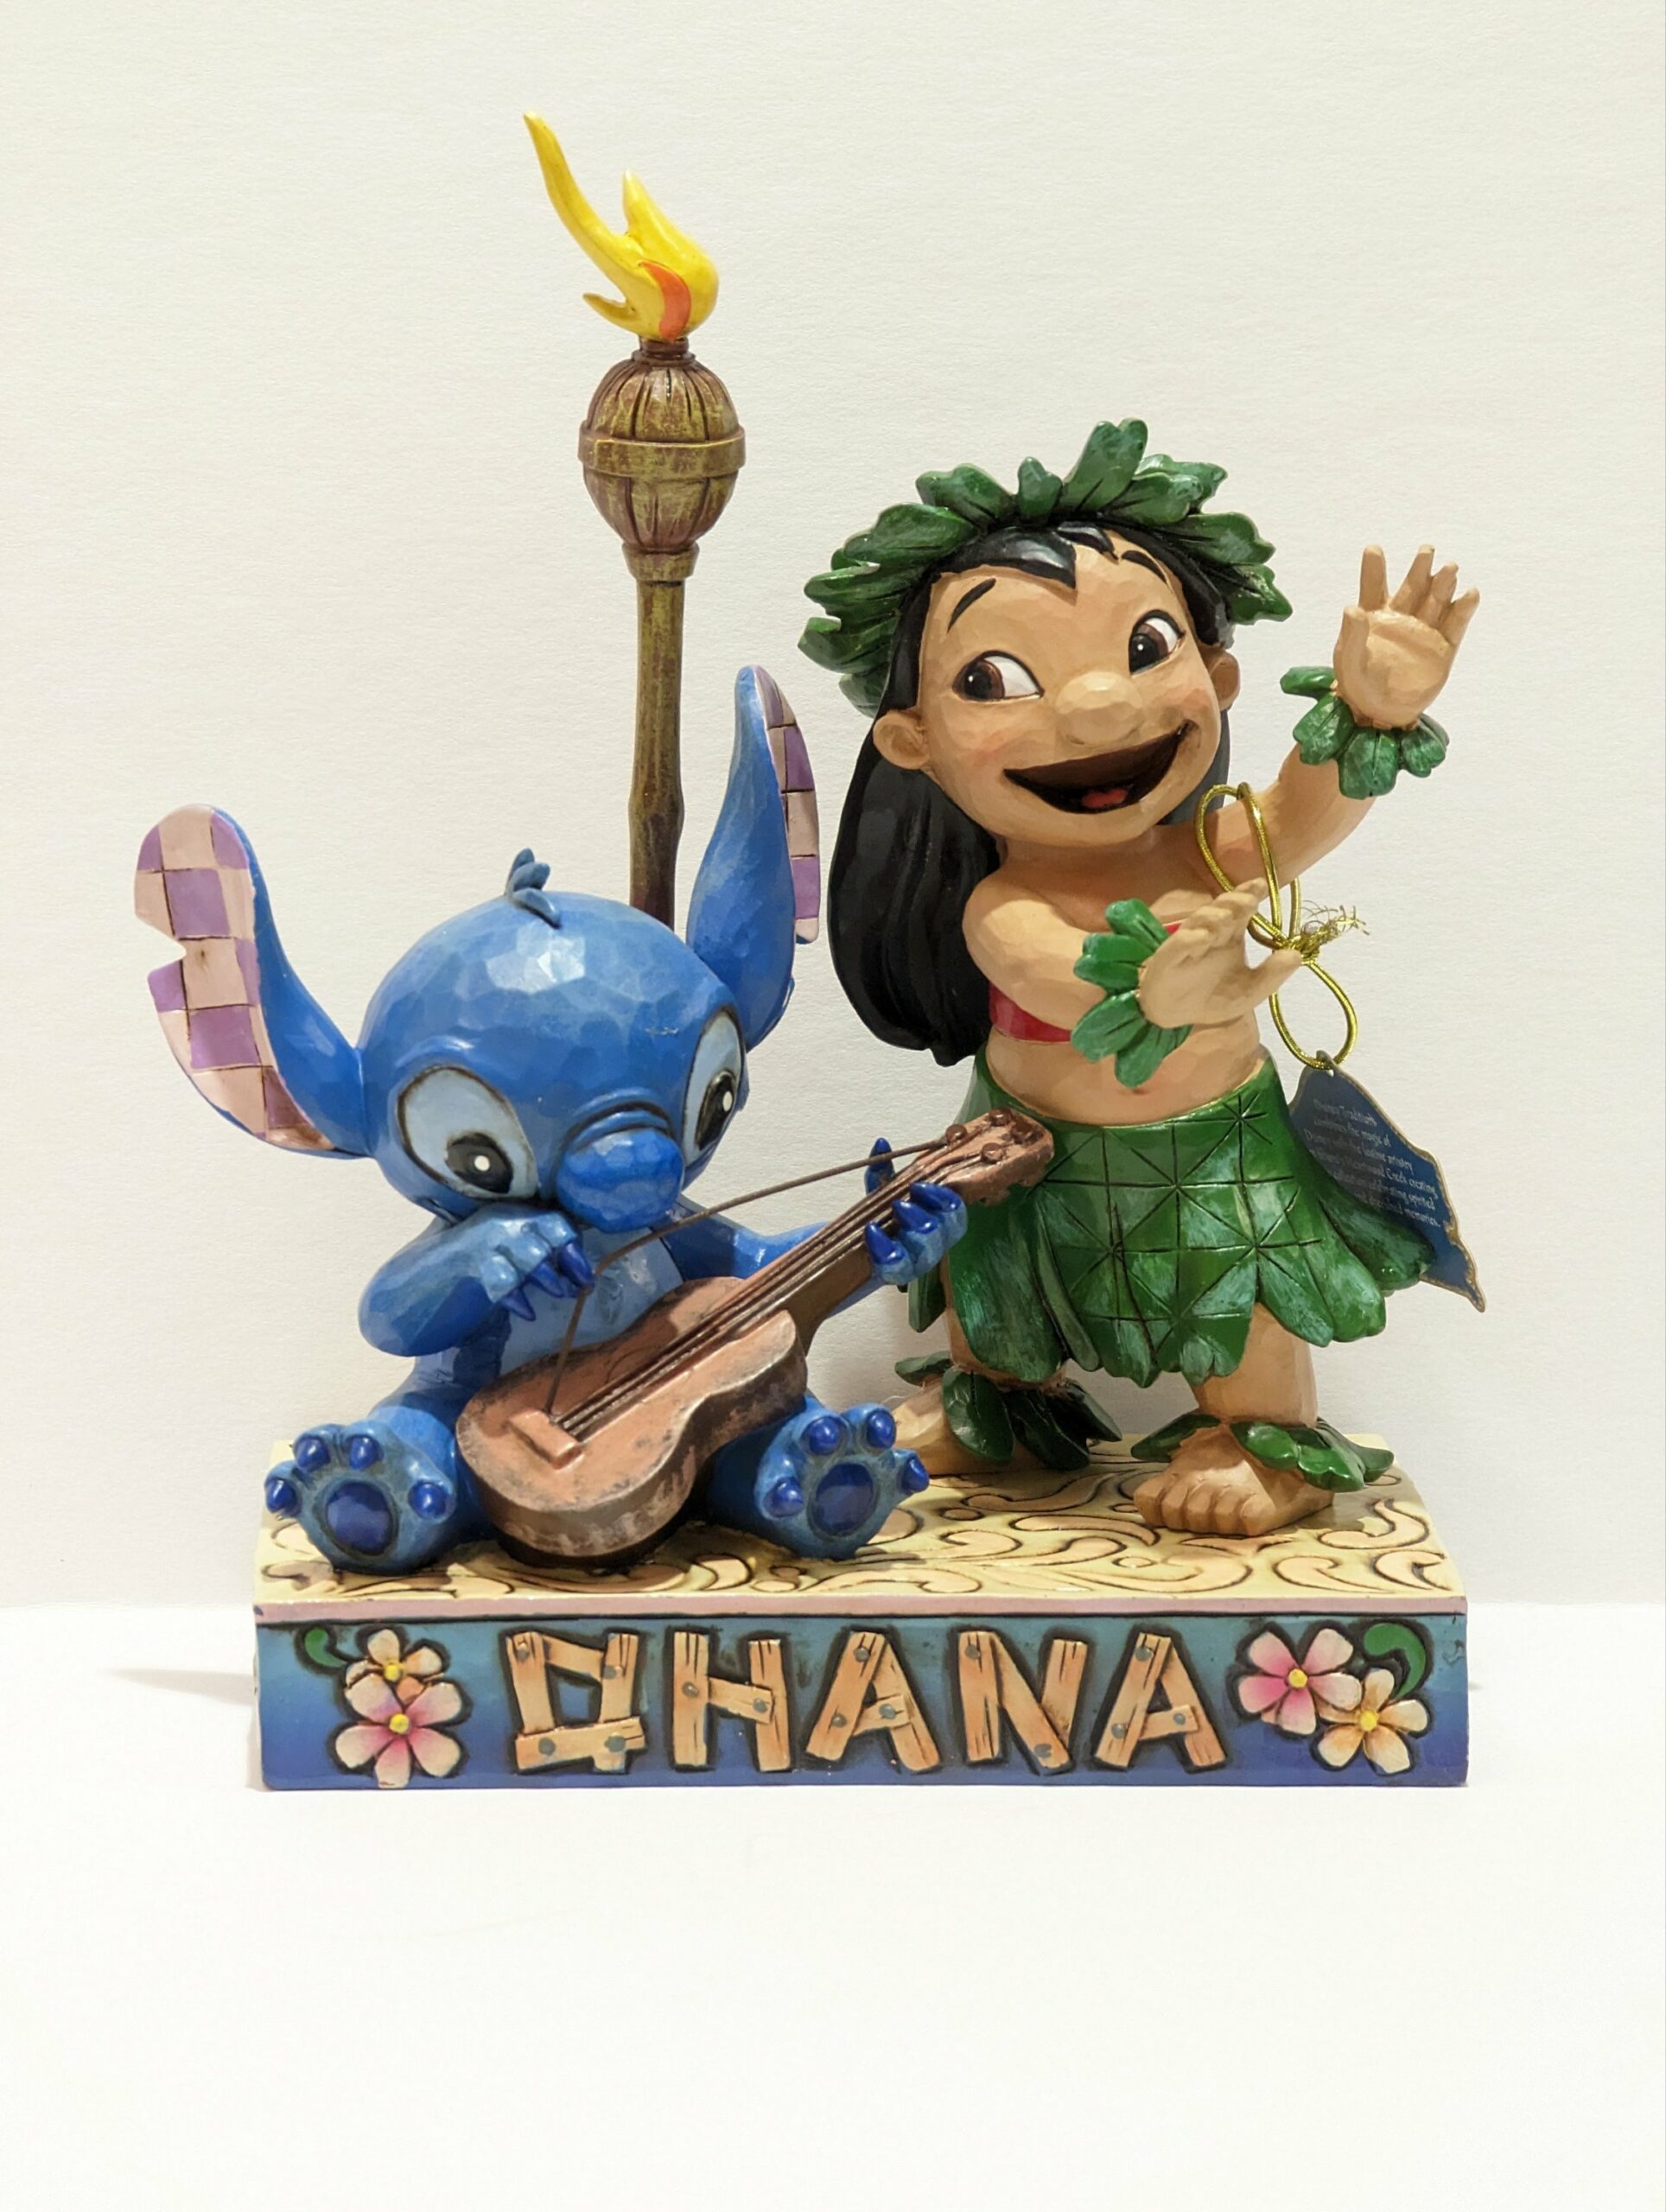 Disney Traditions Figurine - Lilo and Stitch